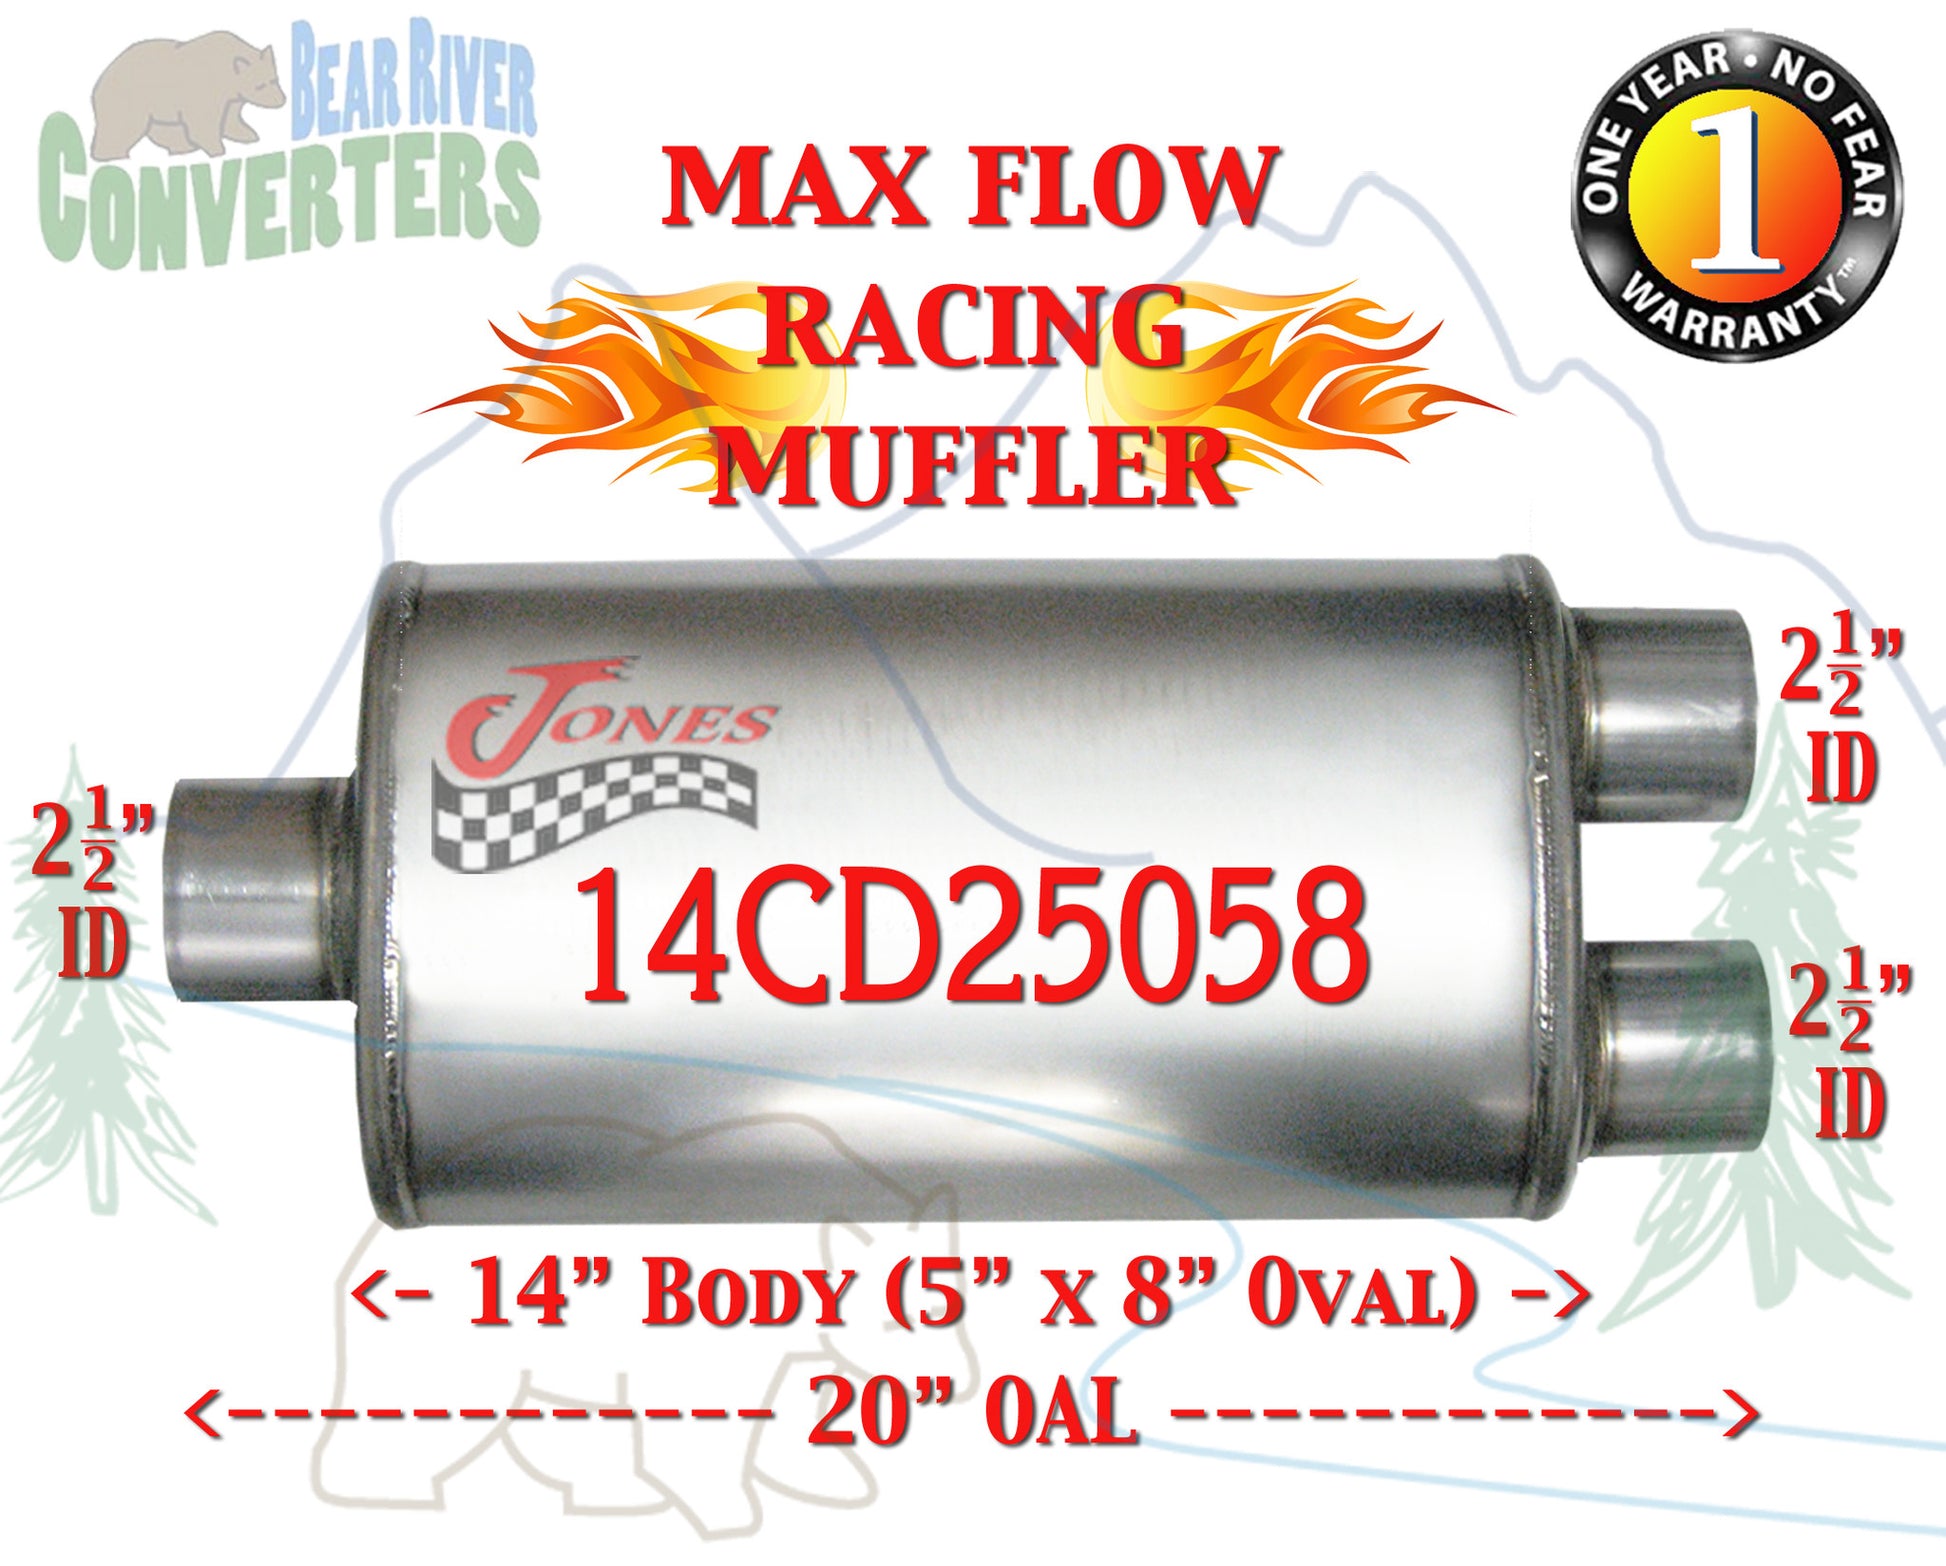 14CD25058 Jones MF2158 Max Flow Racing Muffler 14” Oval Body 2 1/2” 2.5” Pipe Center/Dual 20” OAL - Bear River Converters